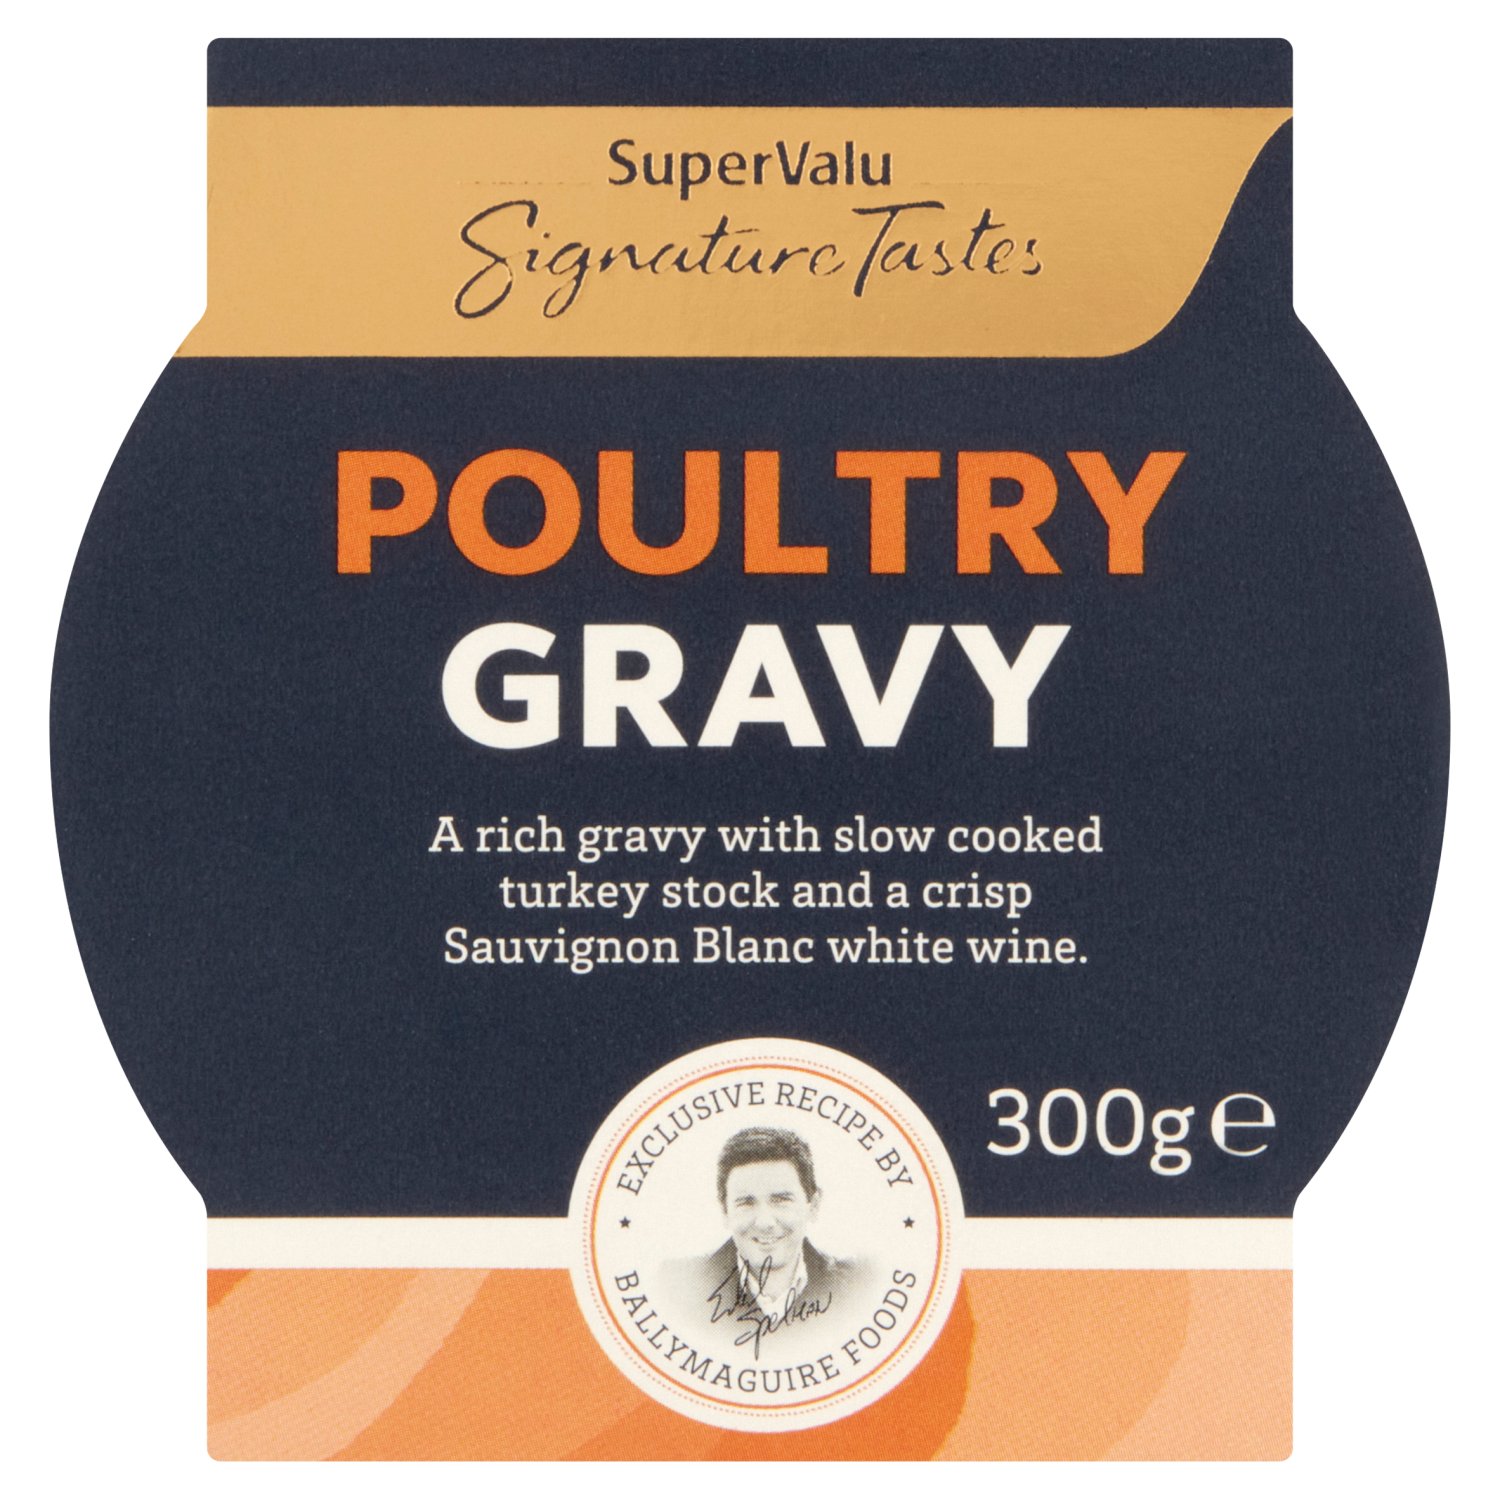 Signature Tastes Poultry Gravy (300 g)